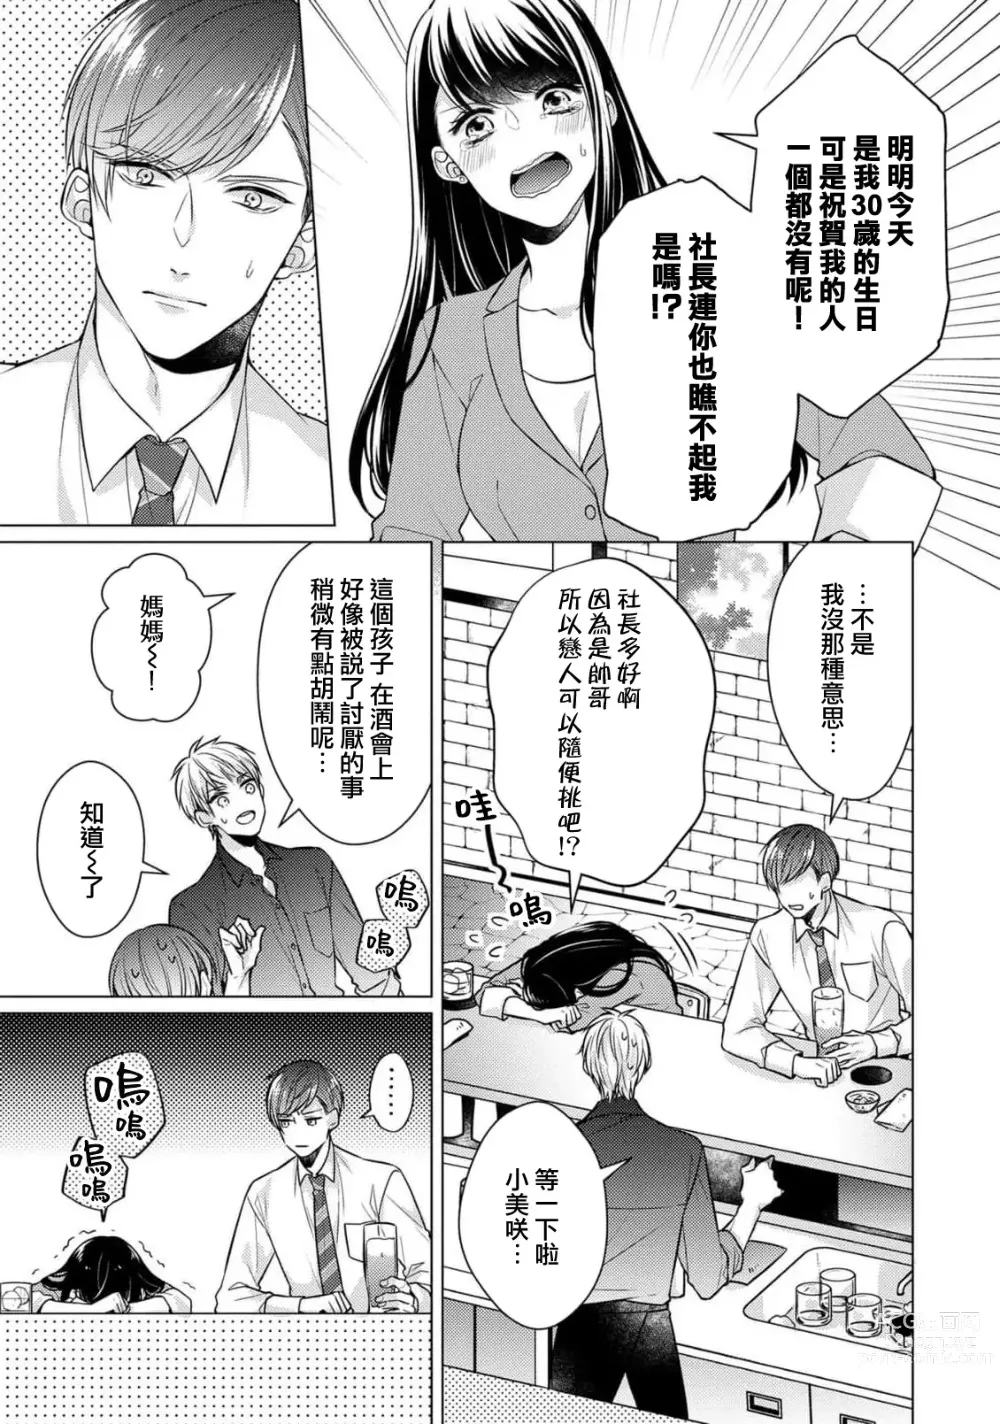 Page 12 of manga 宠爱王子和处女少女~30岁还是处女，这一次和真壁社长签订了炮友契约~ 1-5 end